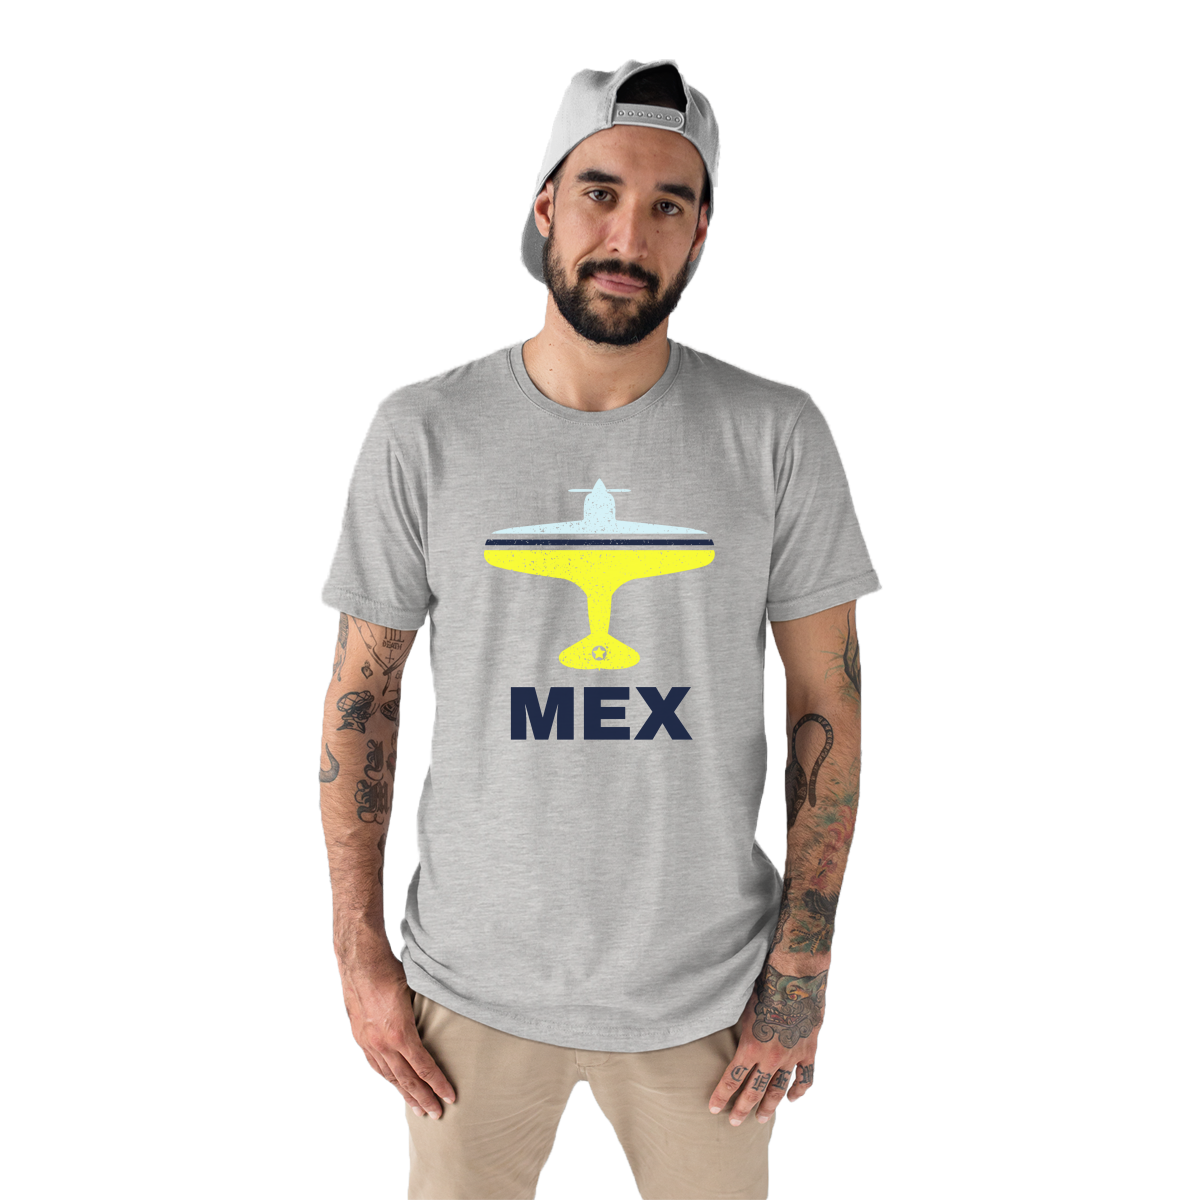 Fly Mexico City MEX Airport  Men's T-shirt | Gray